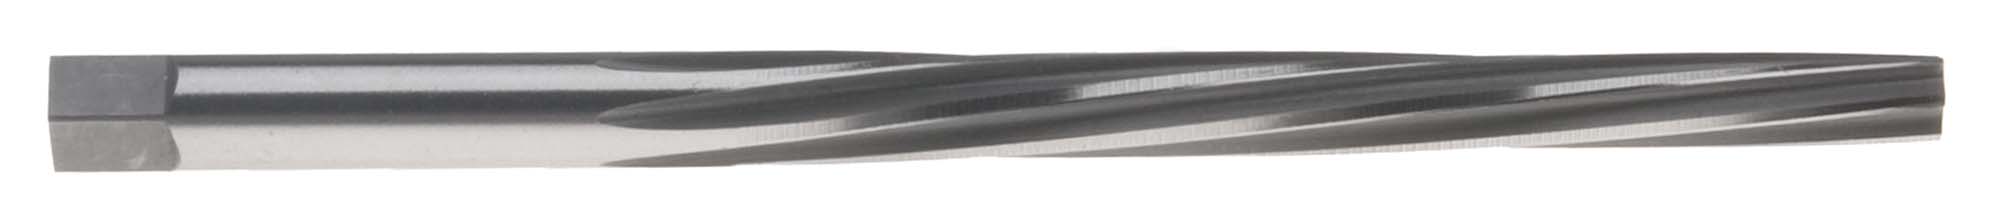 #8 Spiral Flute Taper Pin Reamer, High Speed Steel